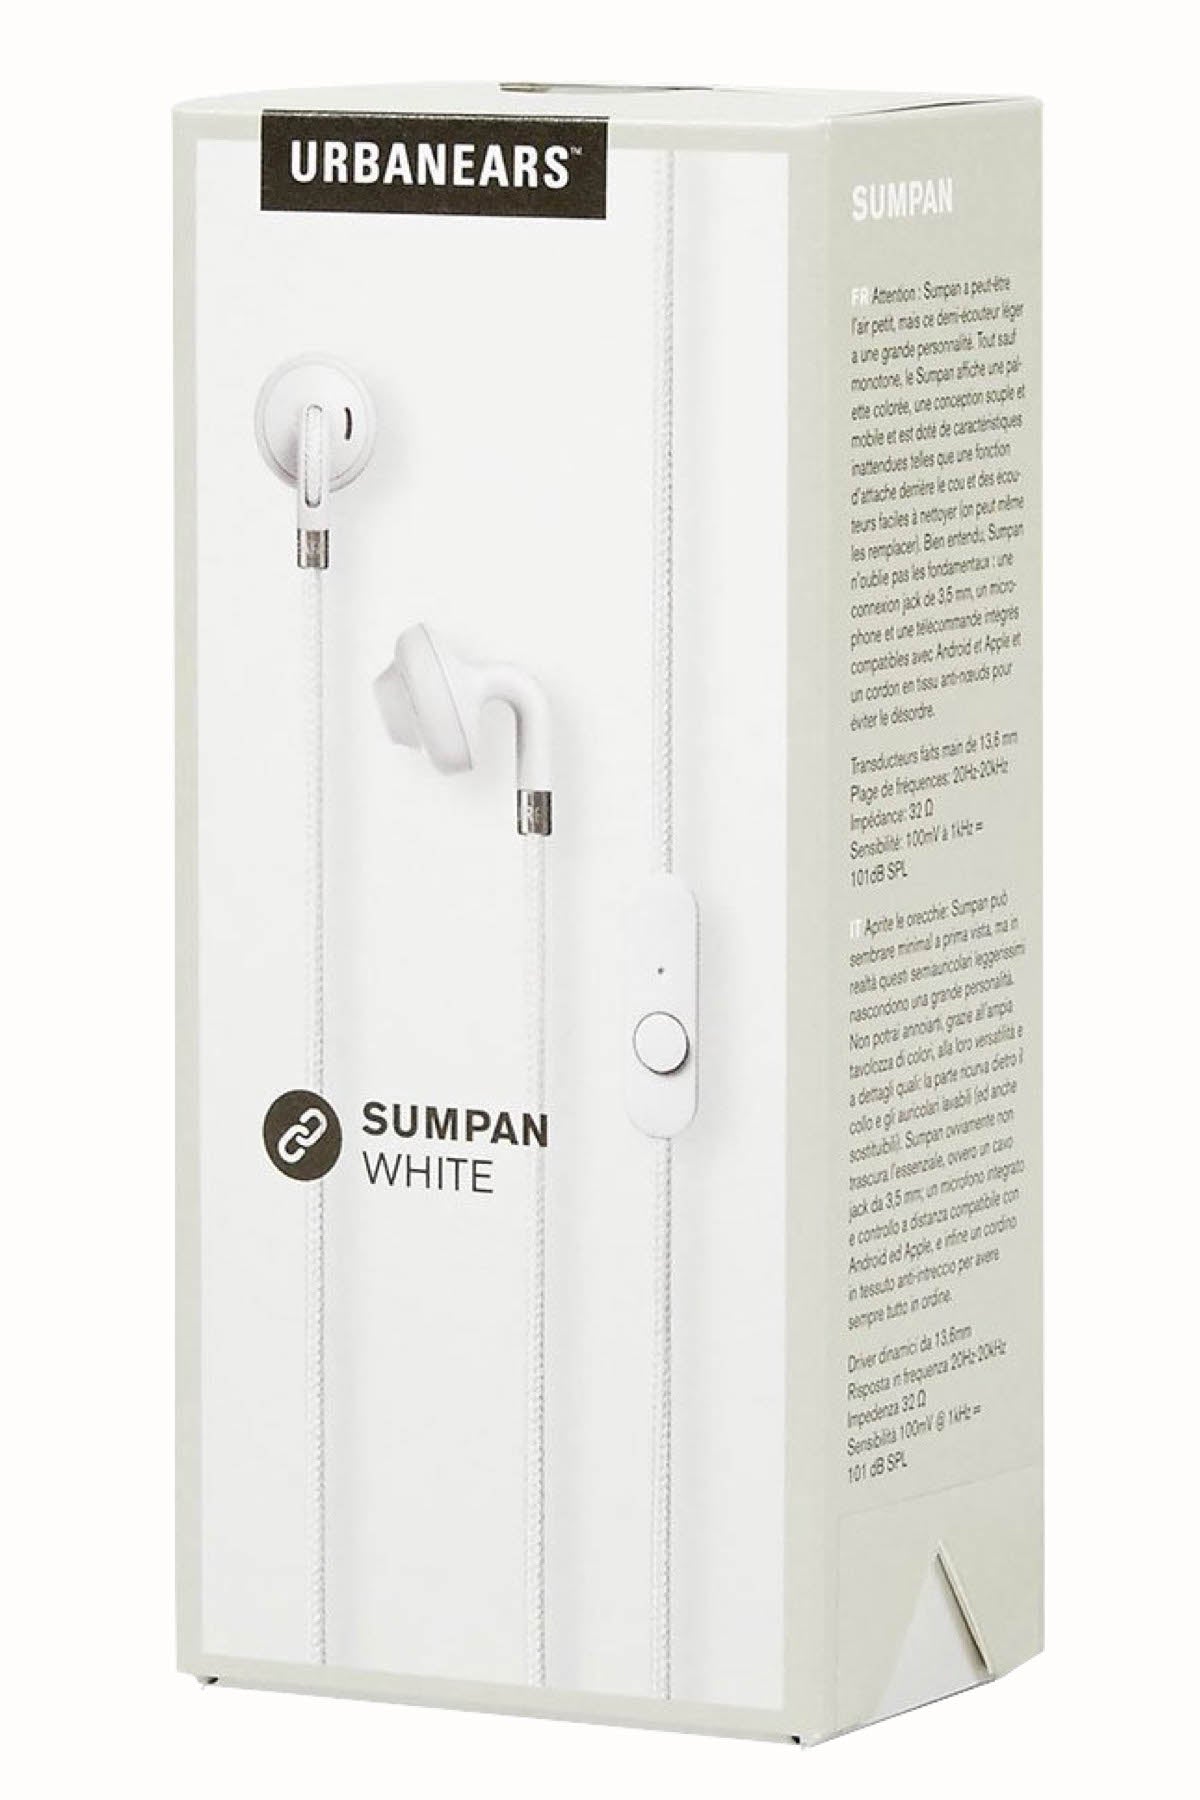 UrbanEars White Sumpan Earbuds w/ Microphone & Remote